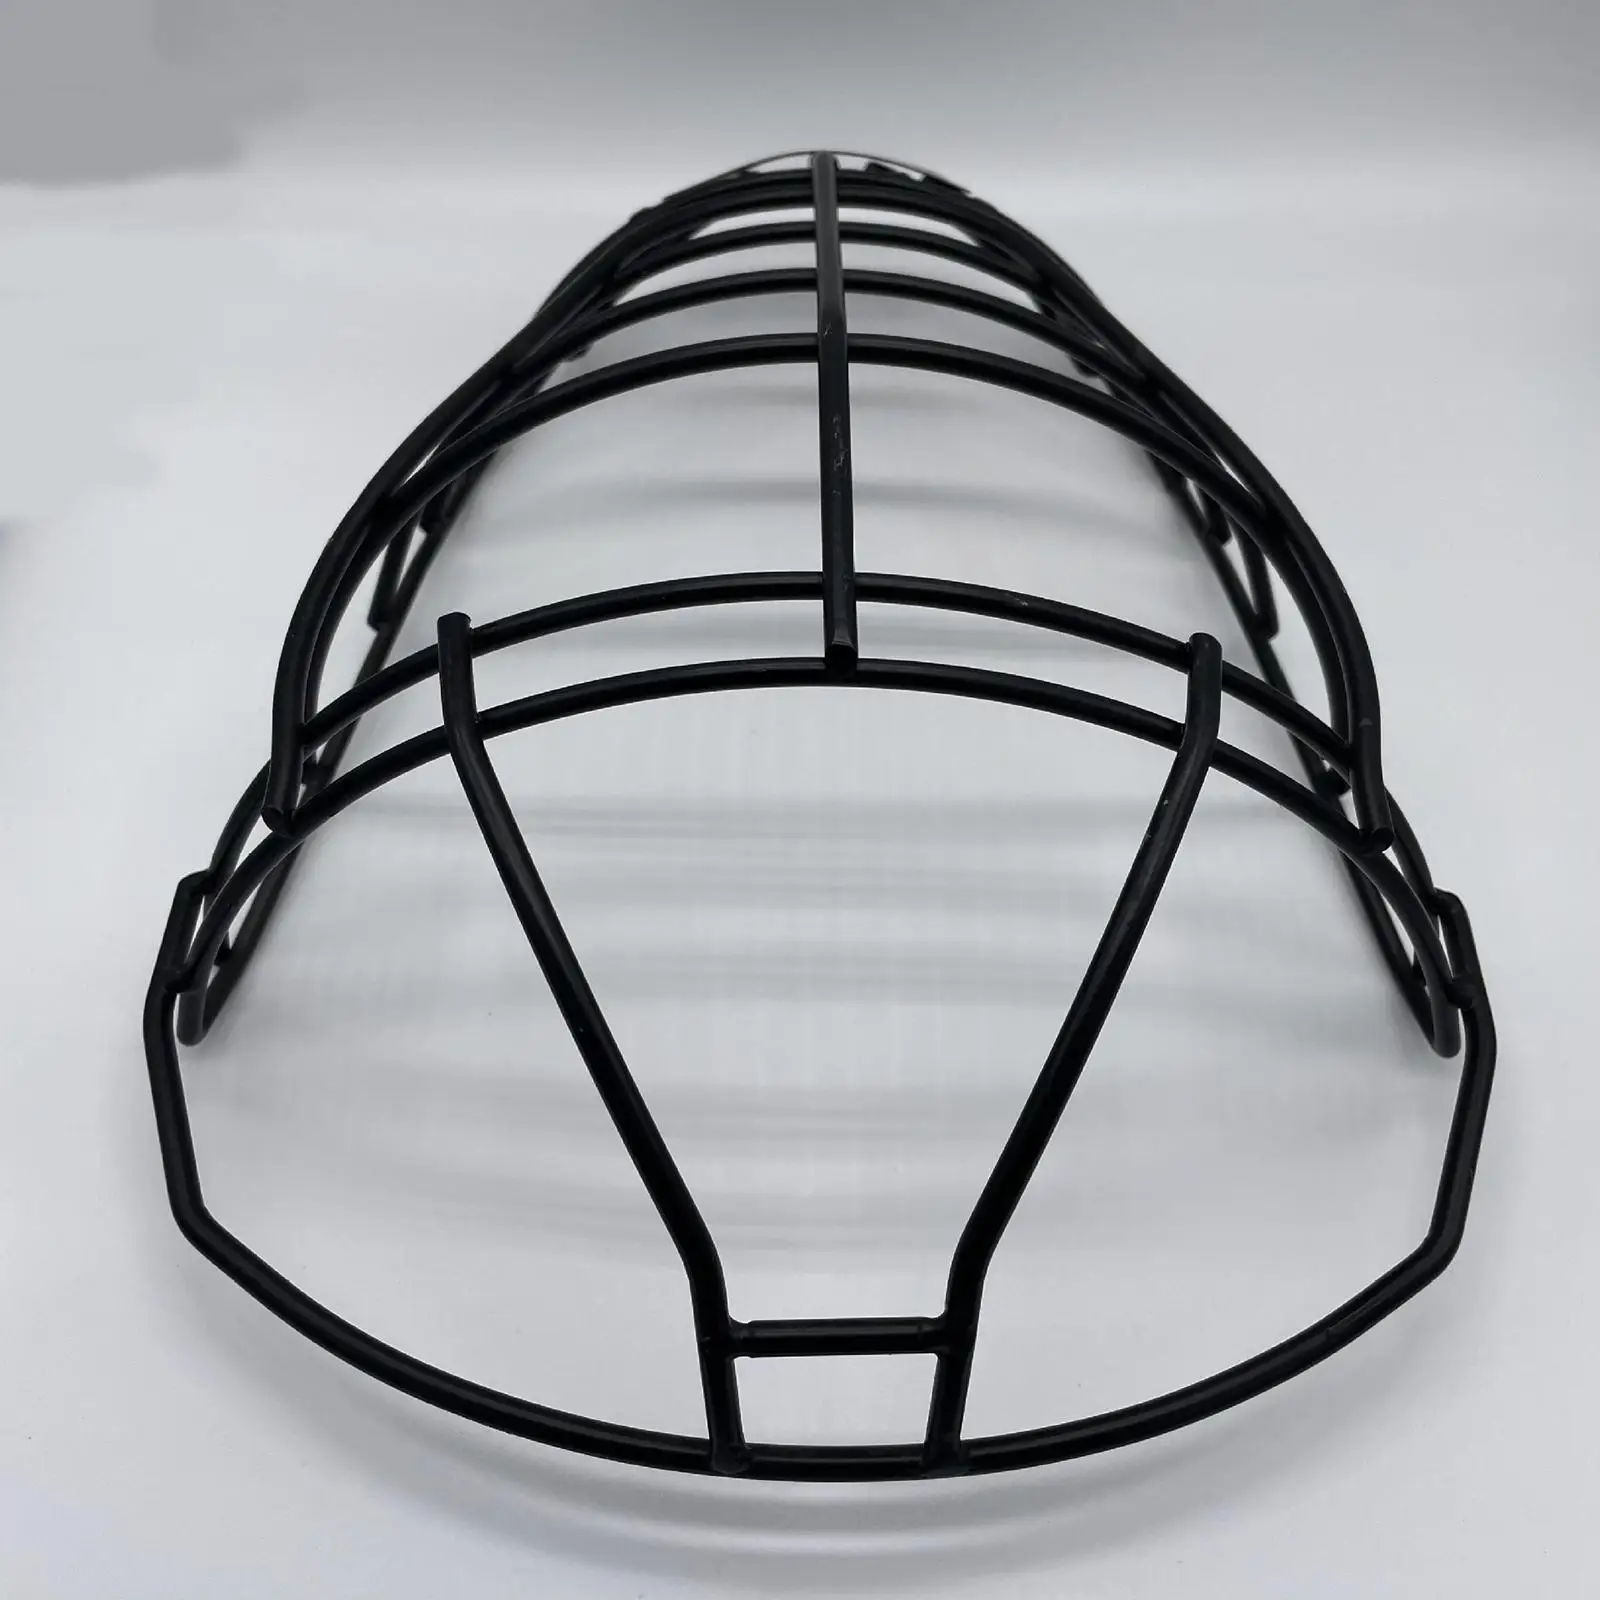 Universal Baseball Face Guard Shield Equipment Junior Wide Vision Batting Helmet Mask for Fielder Softball Outdoor Women Men